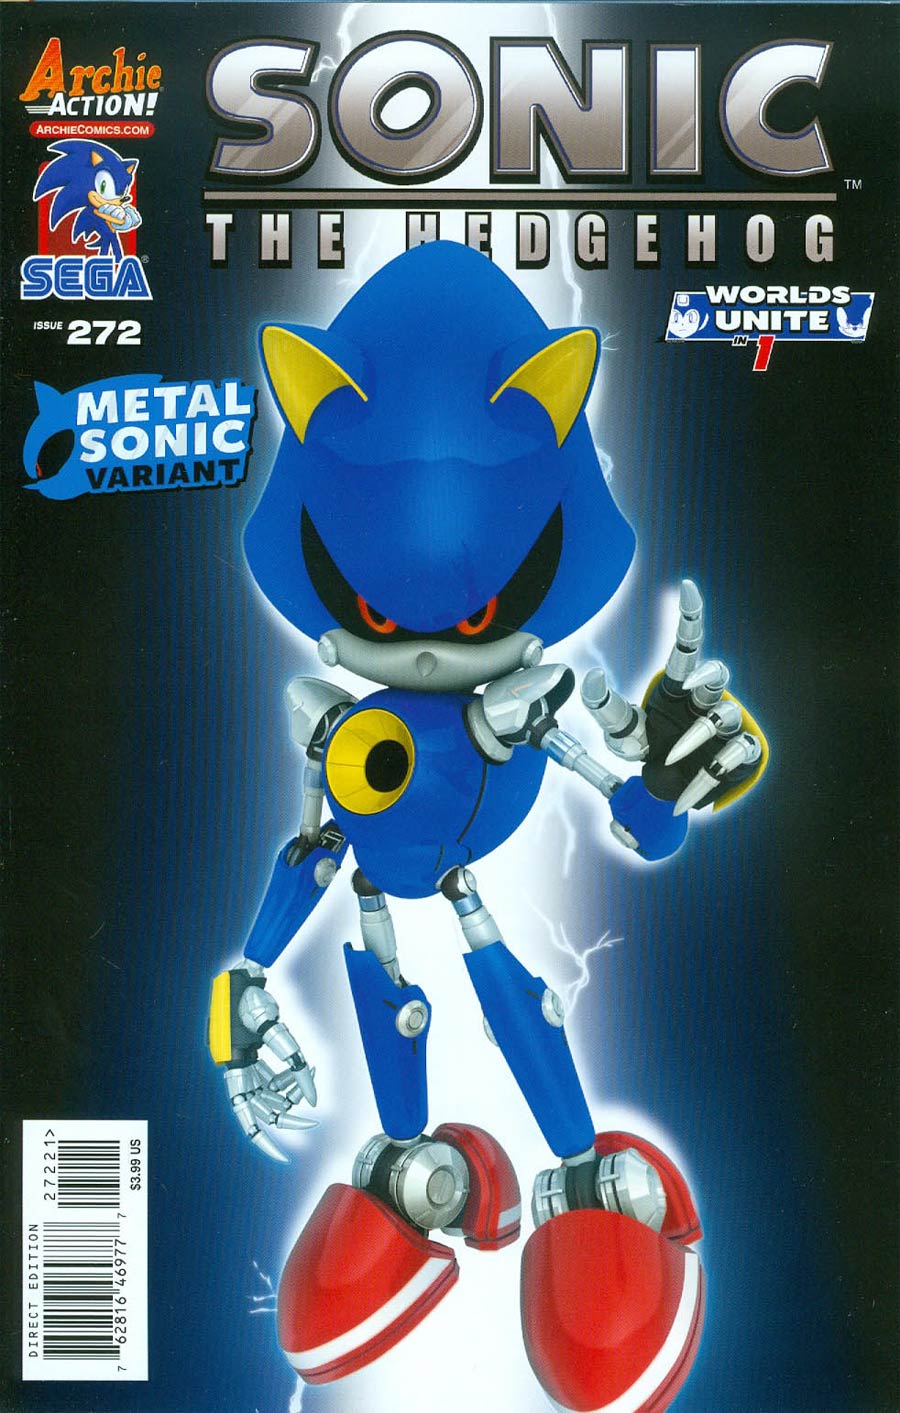 Sonic The Hedgehog Vol 2 #272 Cover B Variant Metal Sonic Game Art Sega Cover